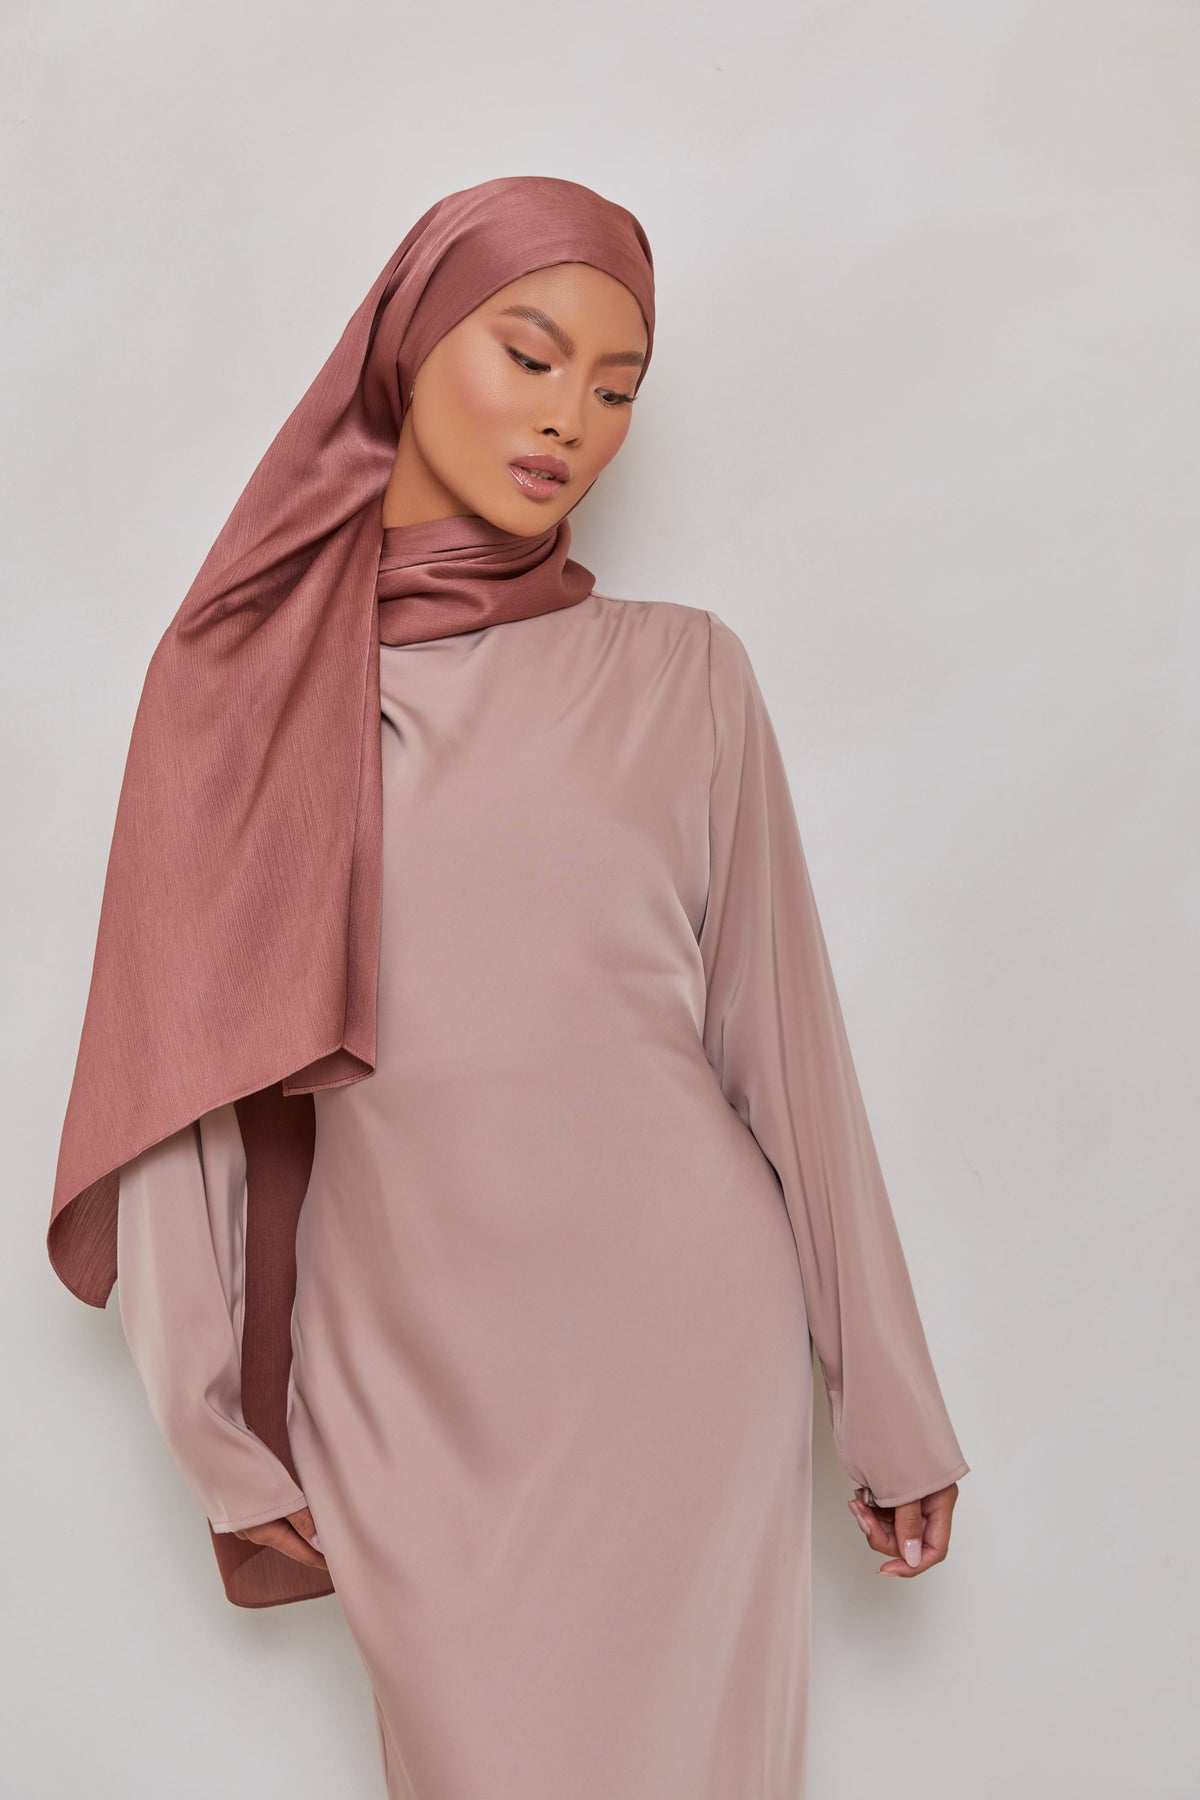 TEXTURE Satin Crepe Hijab - Dark Mauve Crepe epschoolboard 